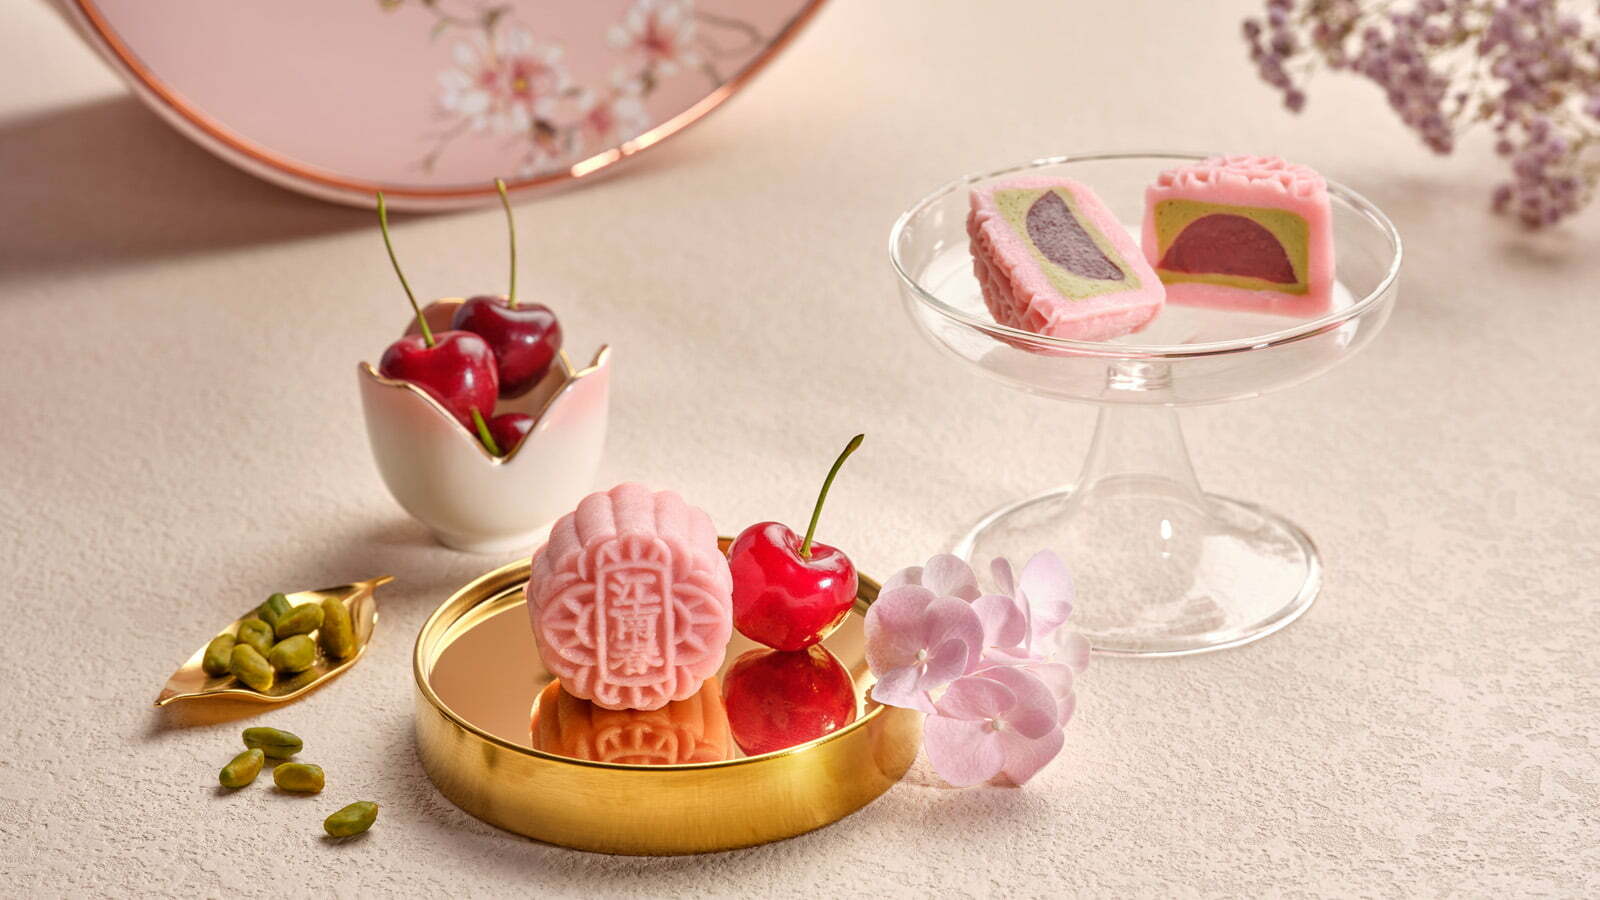 Cherry and Sicilian Pistachio Mooncake from Jiang-Nan Chun at Four Seasons Hotel Singapore